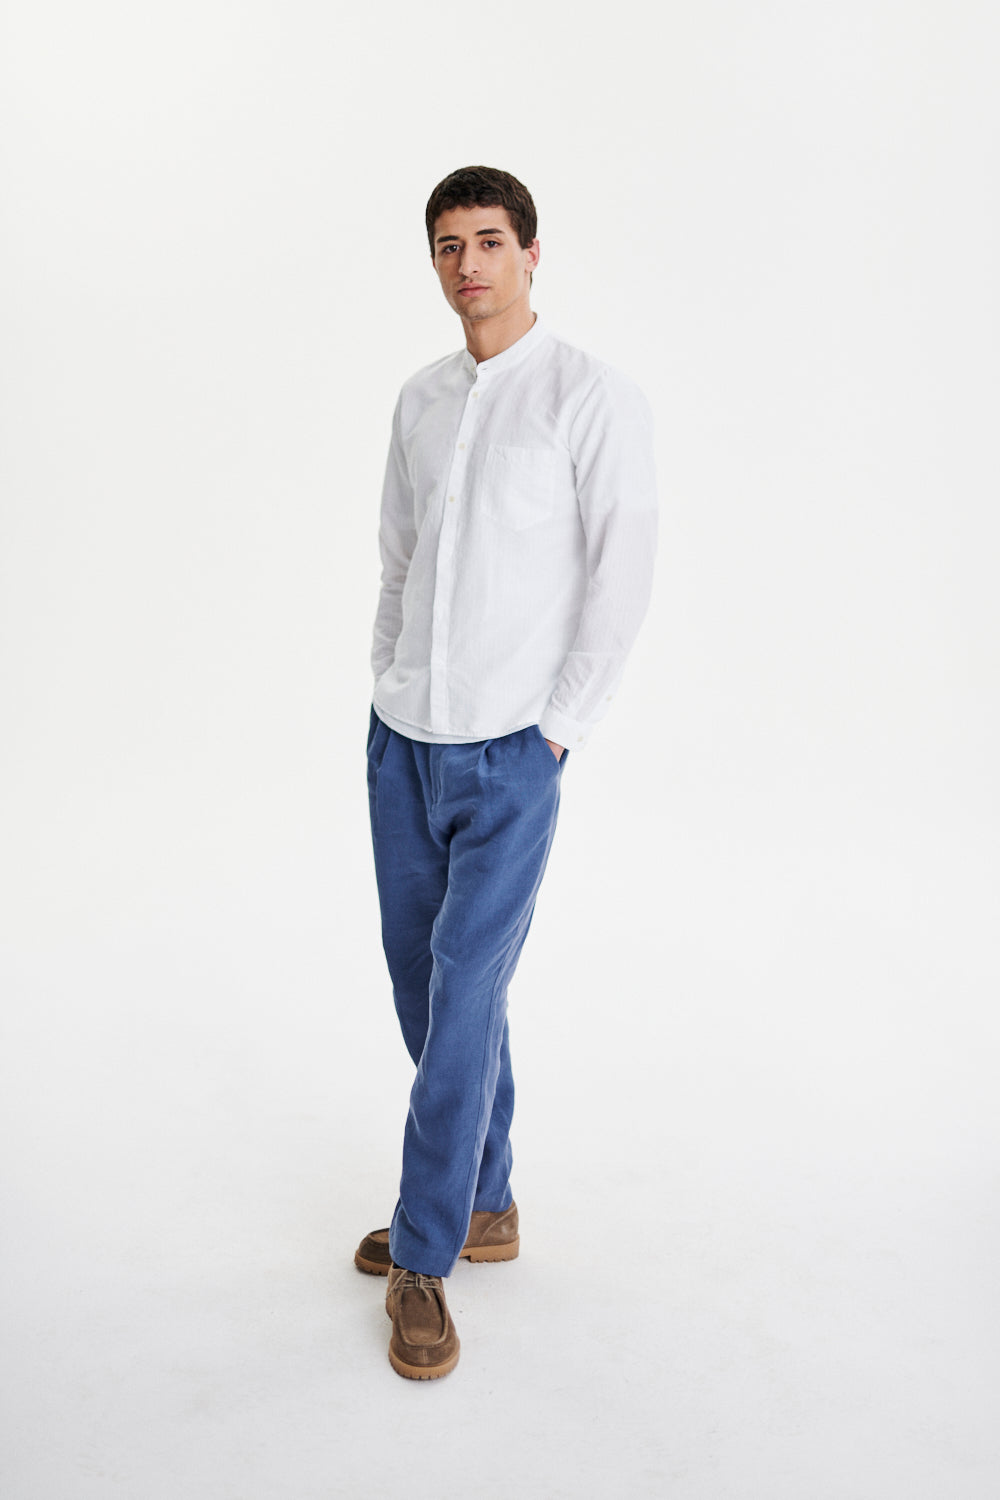 Zen Shirt in a White Soft Portuguese Cotton and Linen Seersucker